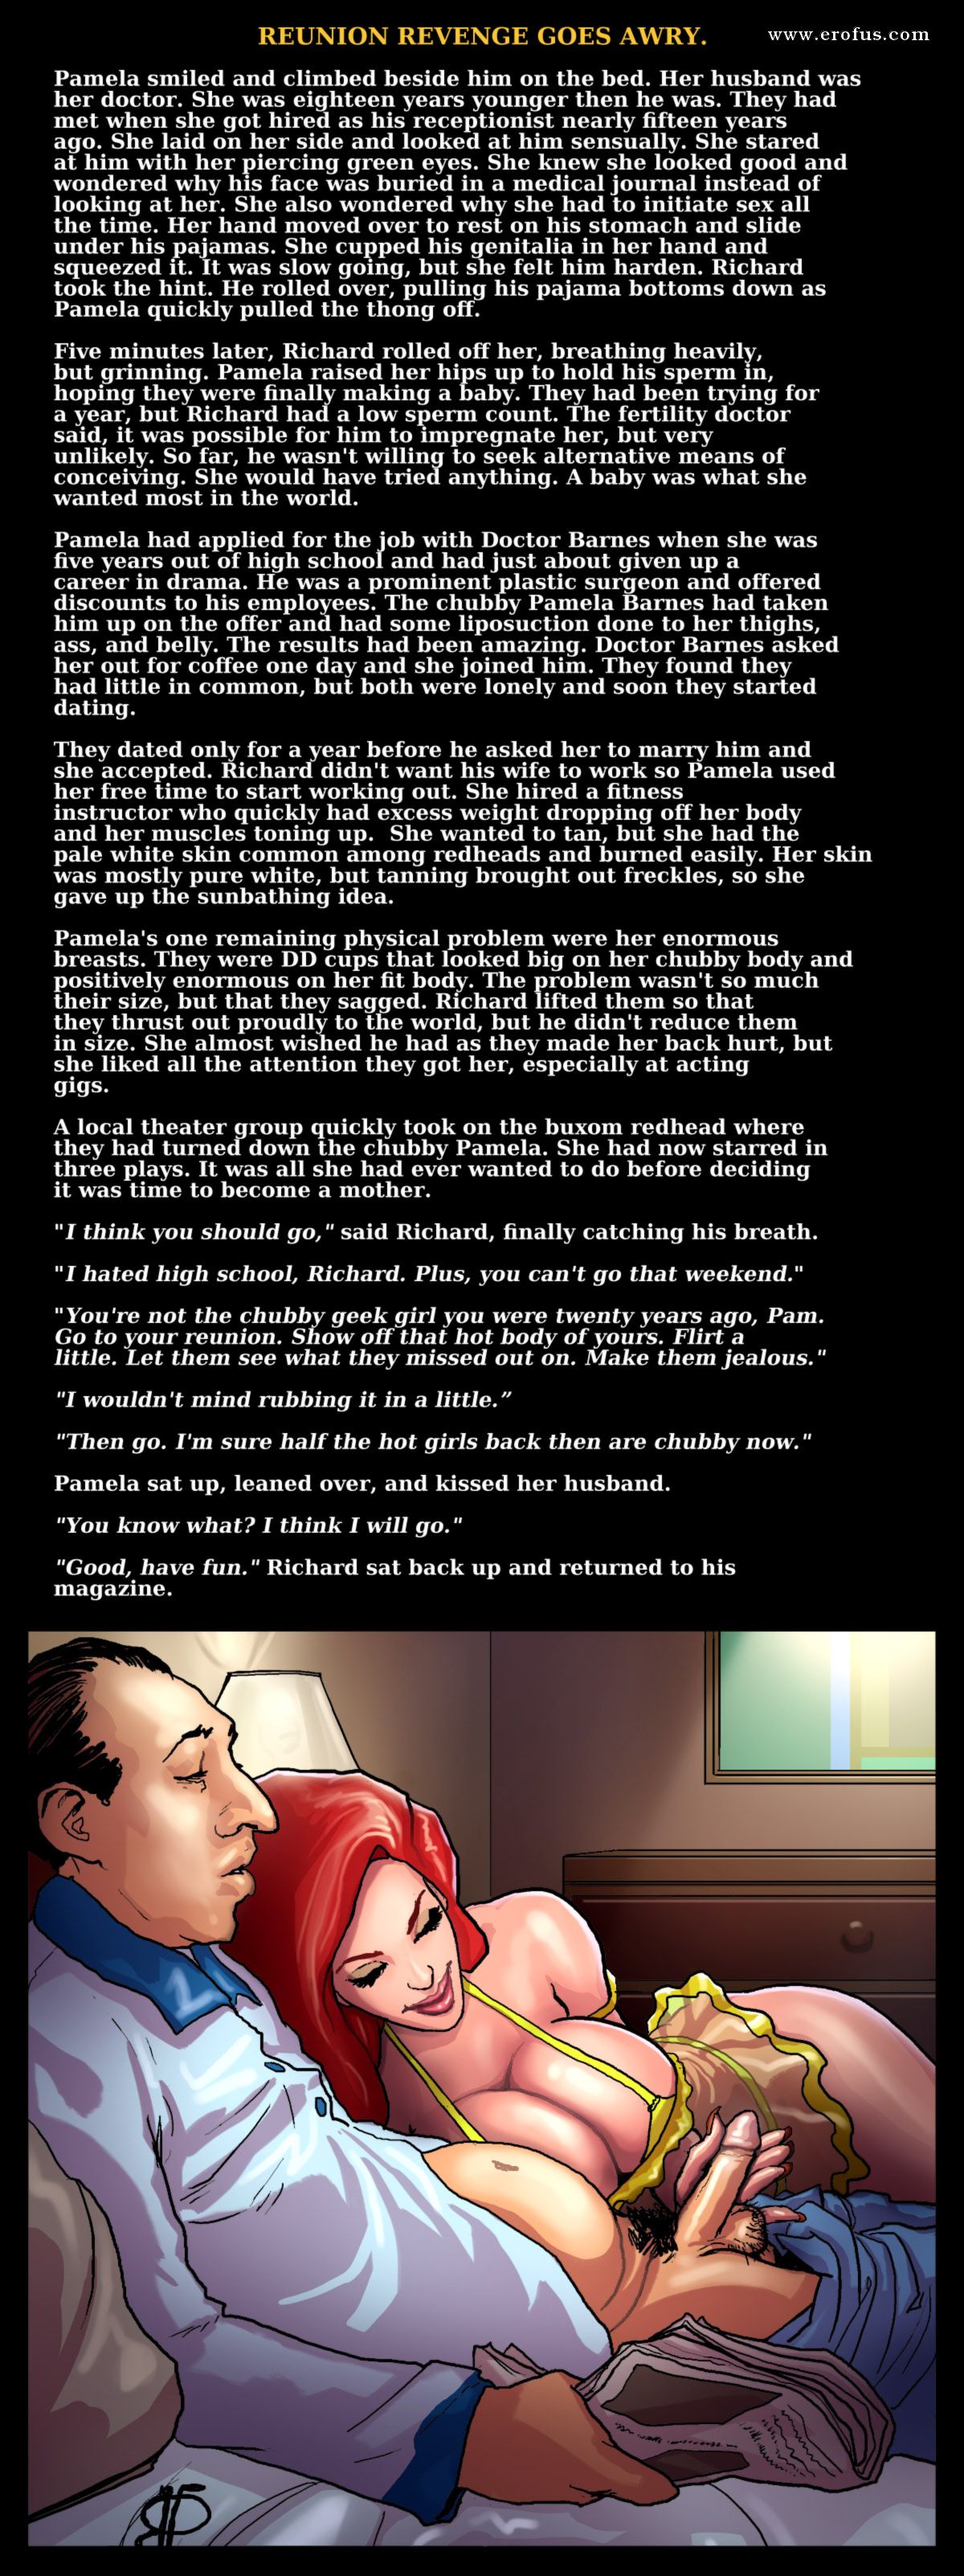 Page 3 blacknwhitecomics_com-comix/illustrated-stories/reunion-revenge-goes-awry Erofus pic